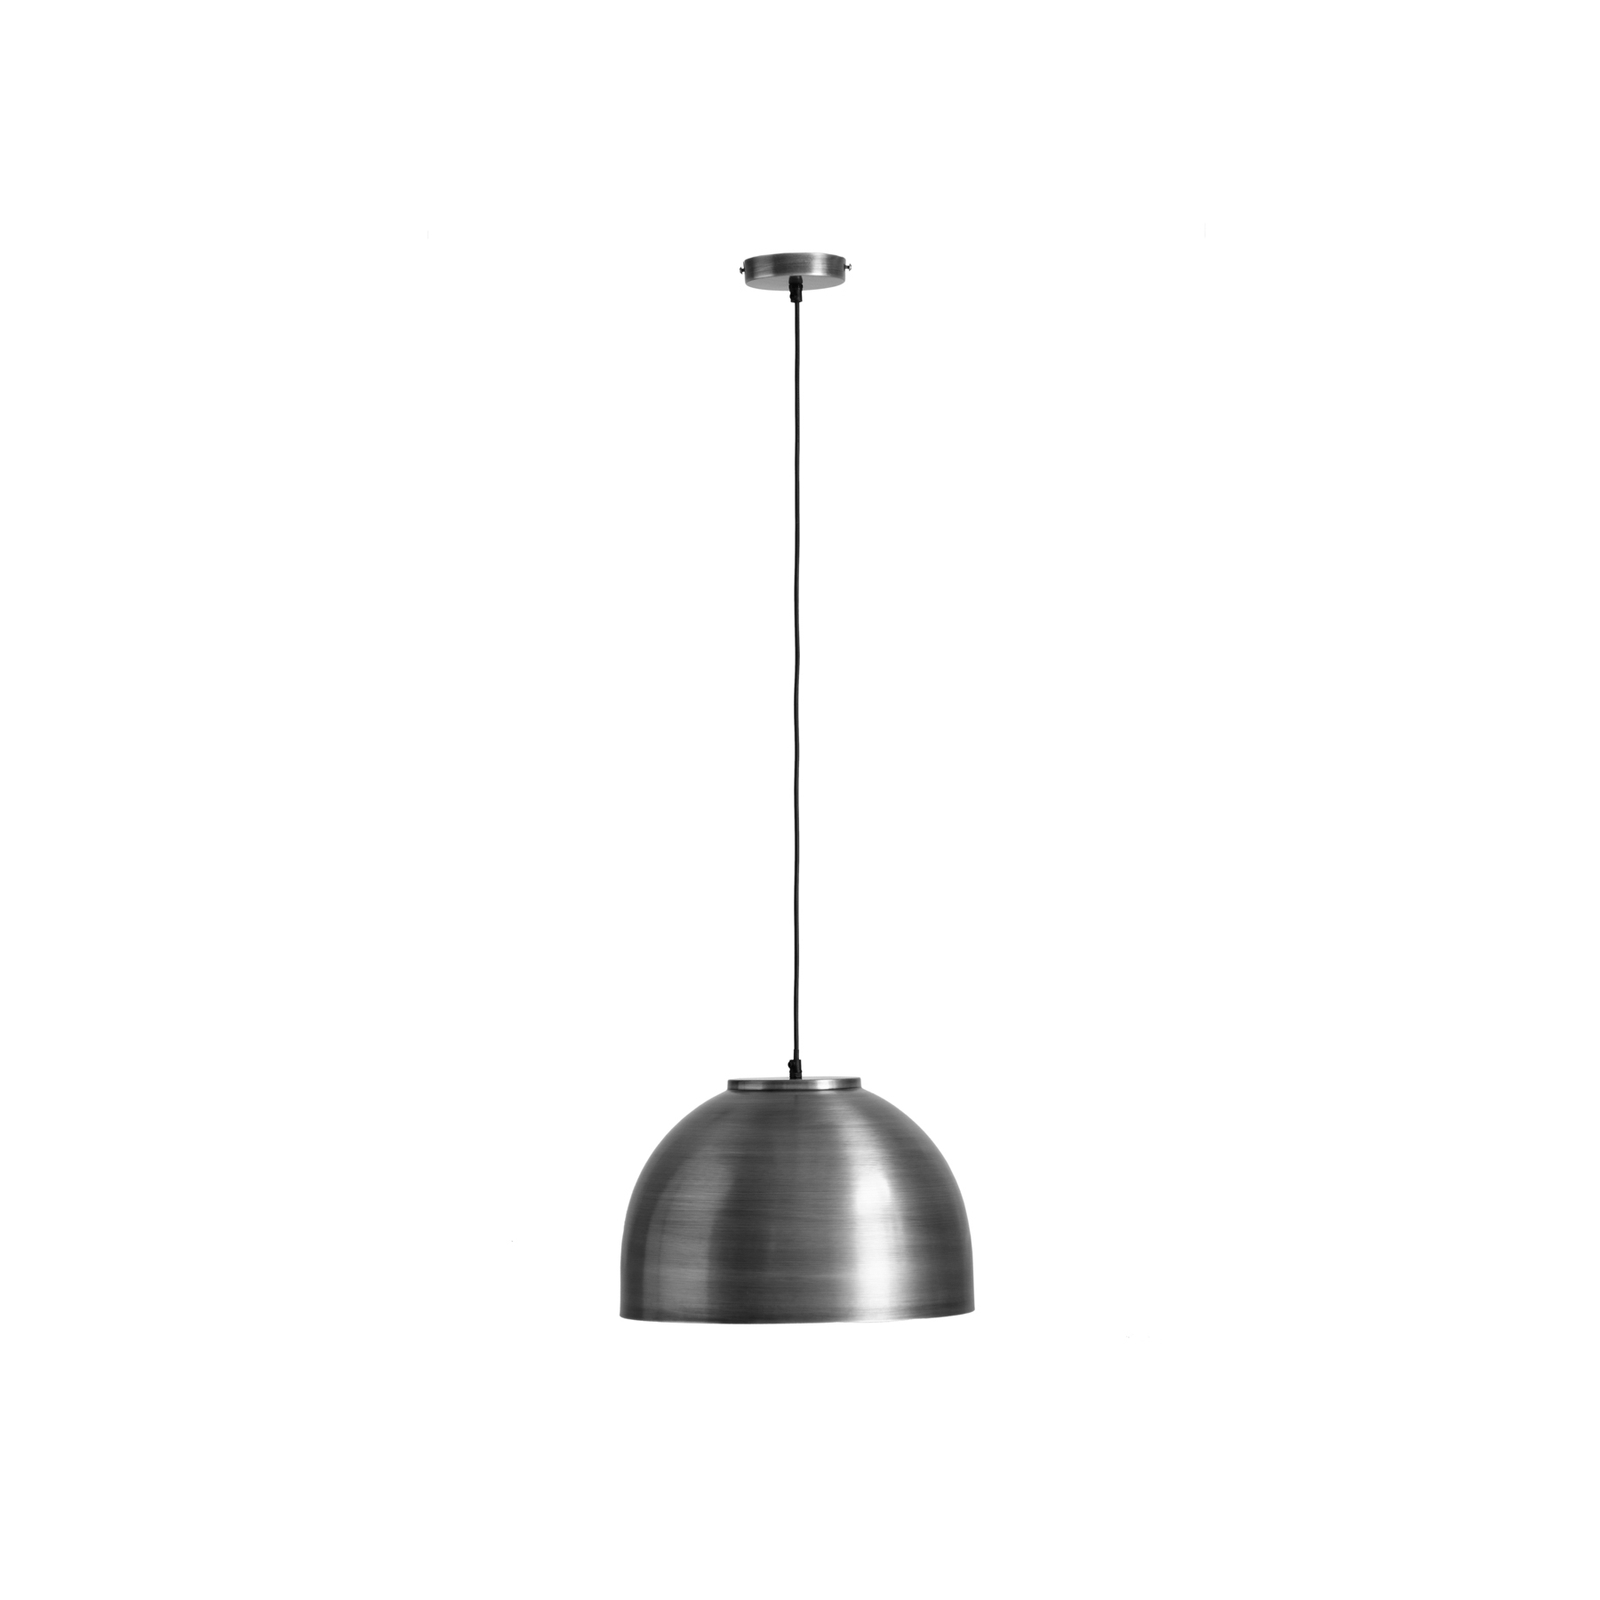 Hermi I pendant light metal lampshade Ø 40cm, grey